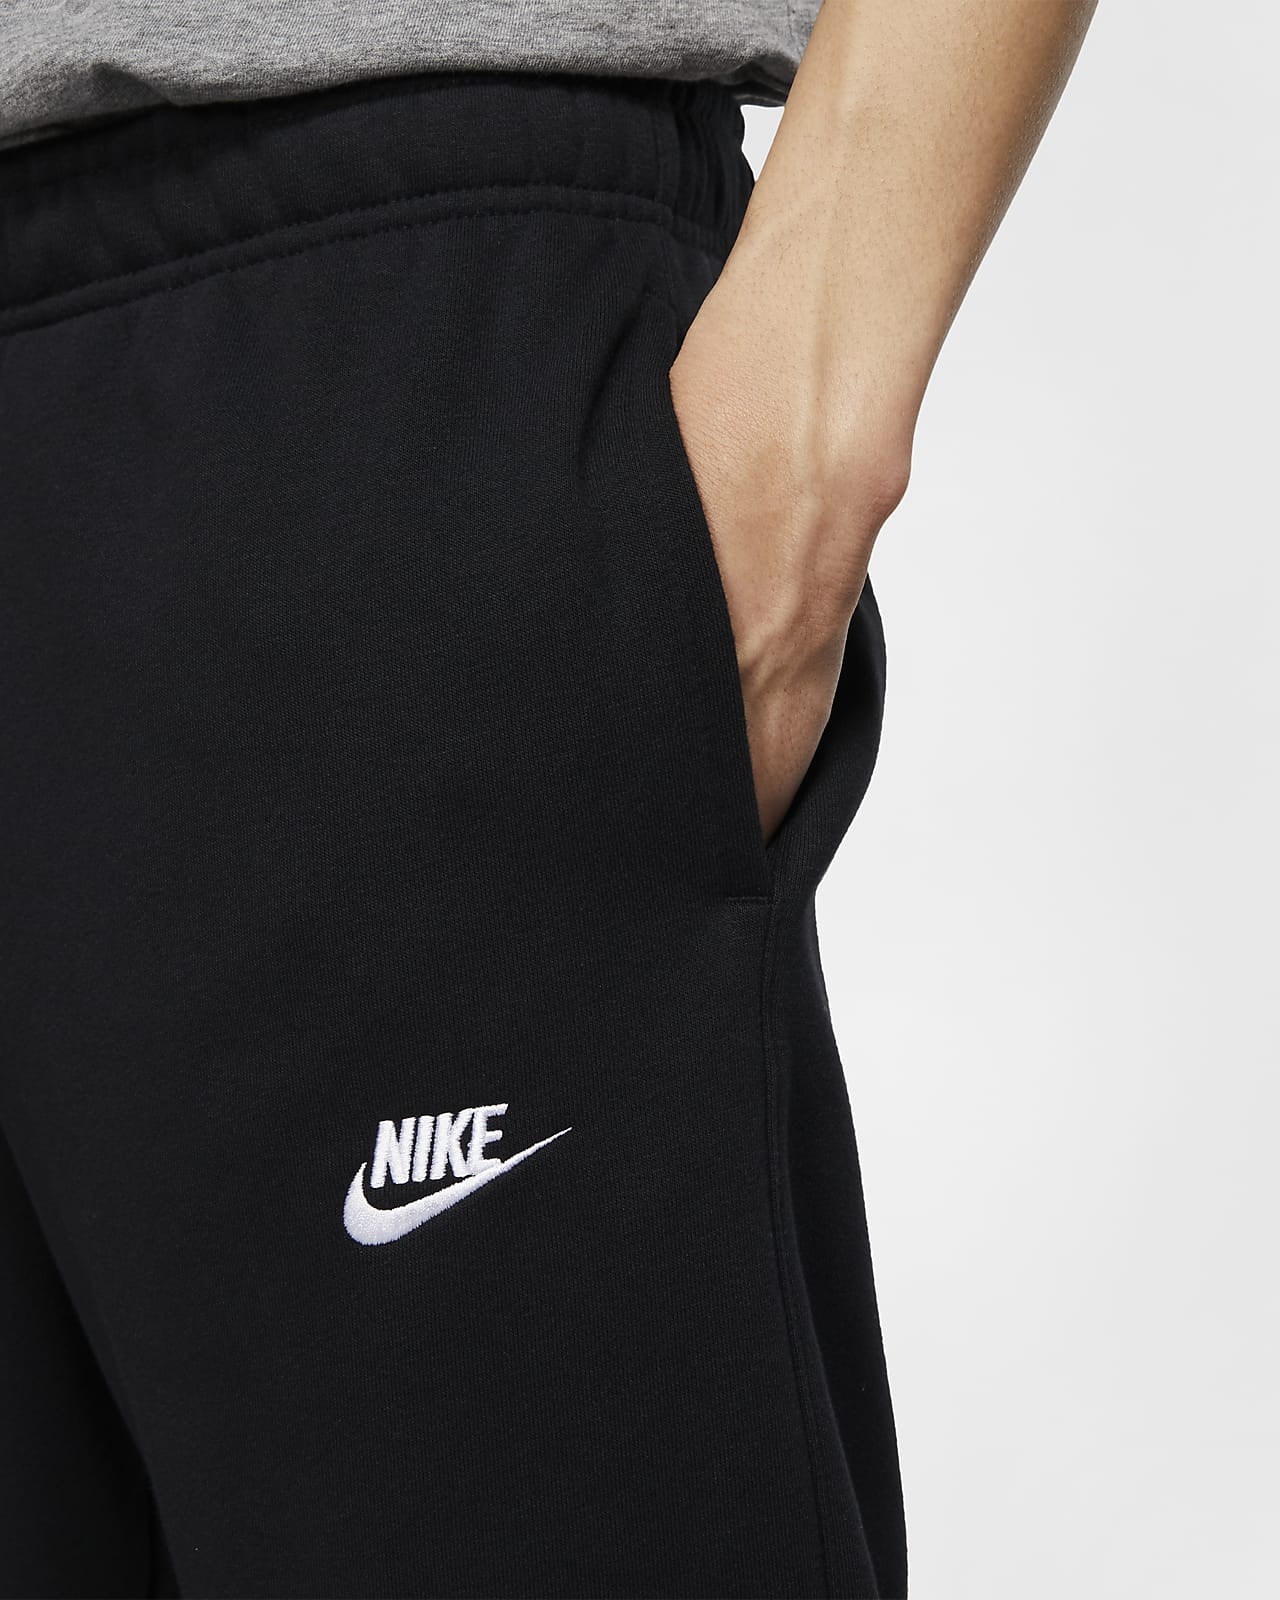 NIKE Nike NSW HYBRID - Jogging Homme black/black/black - Private